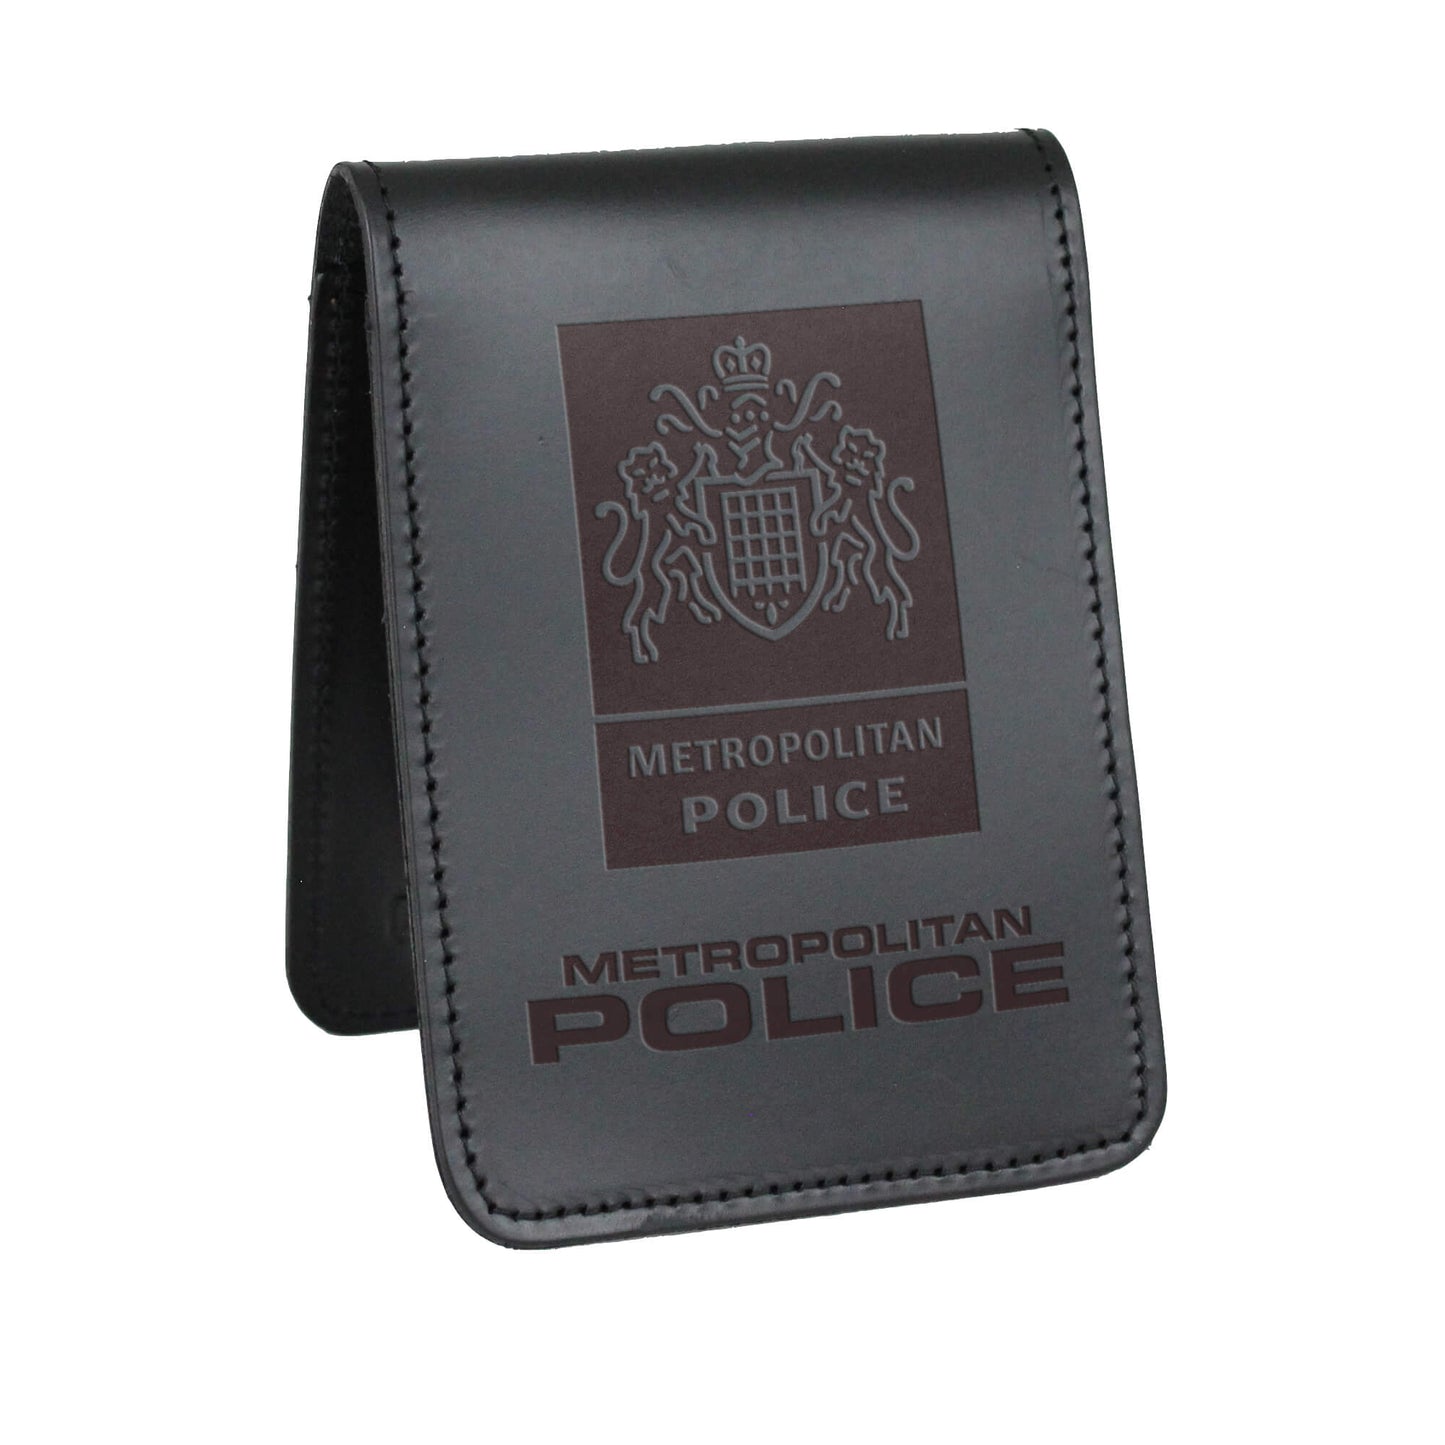 Metropolitan Police UK Notebook Cover